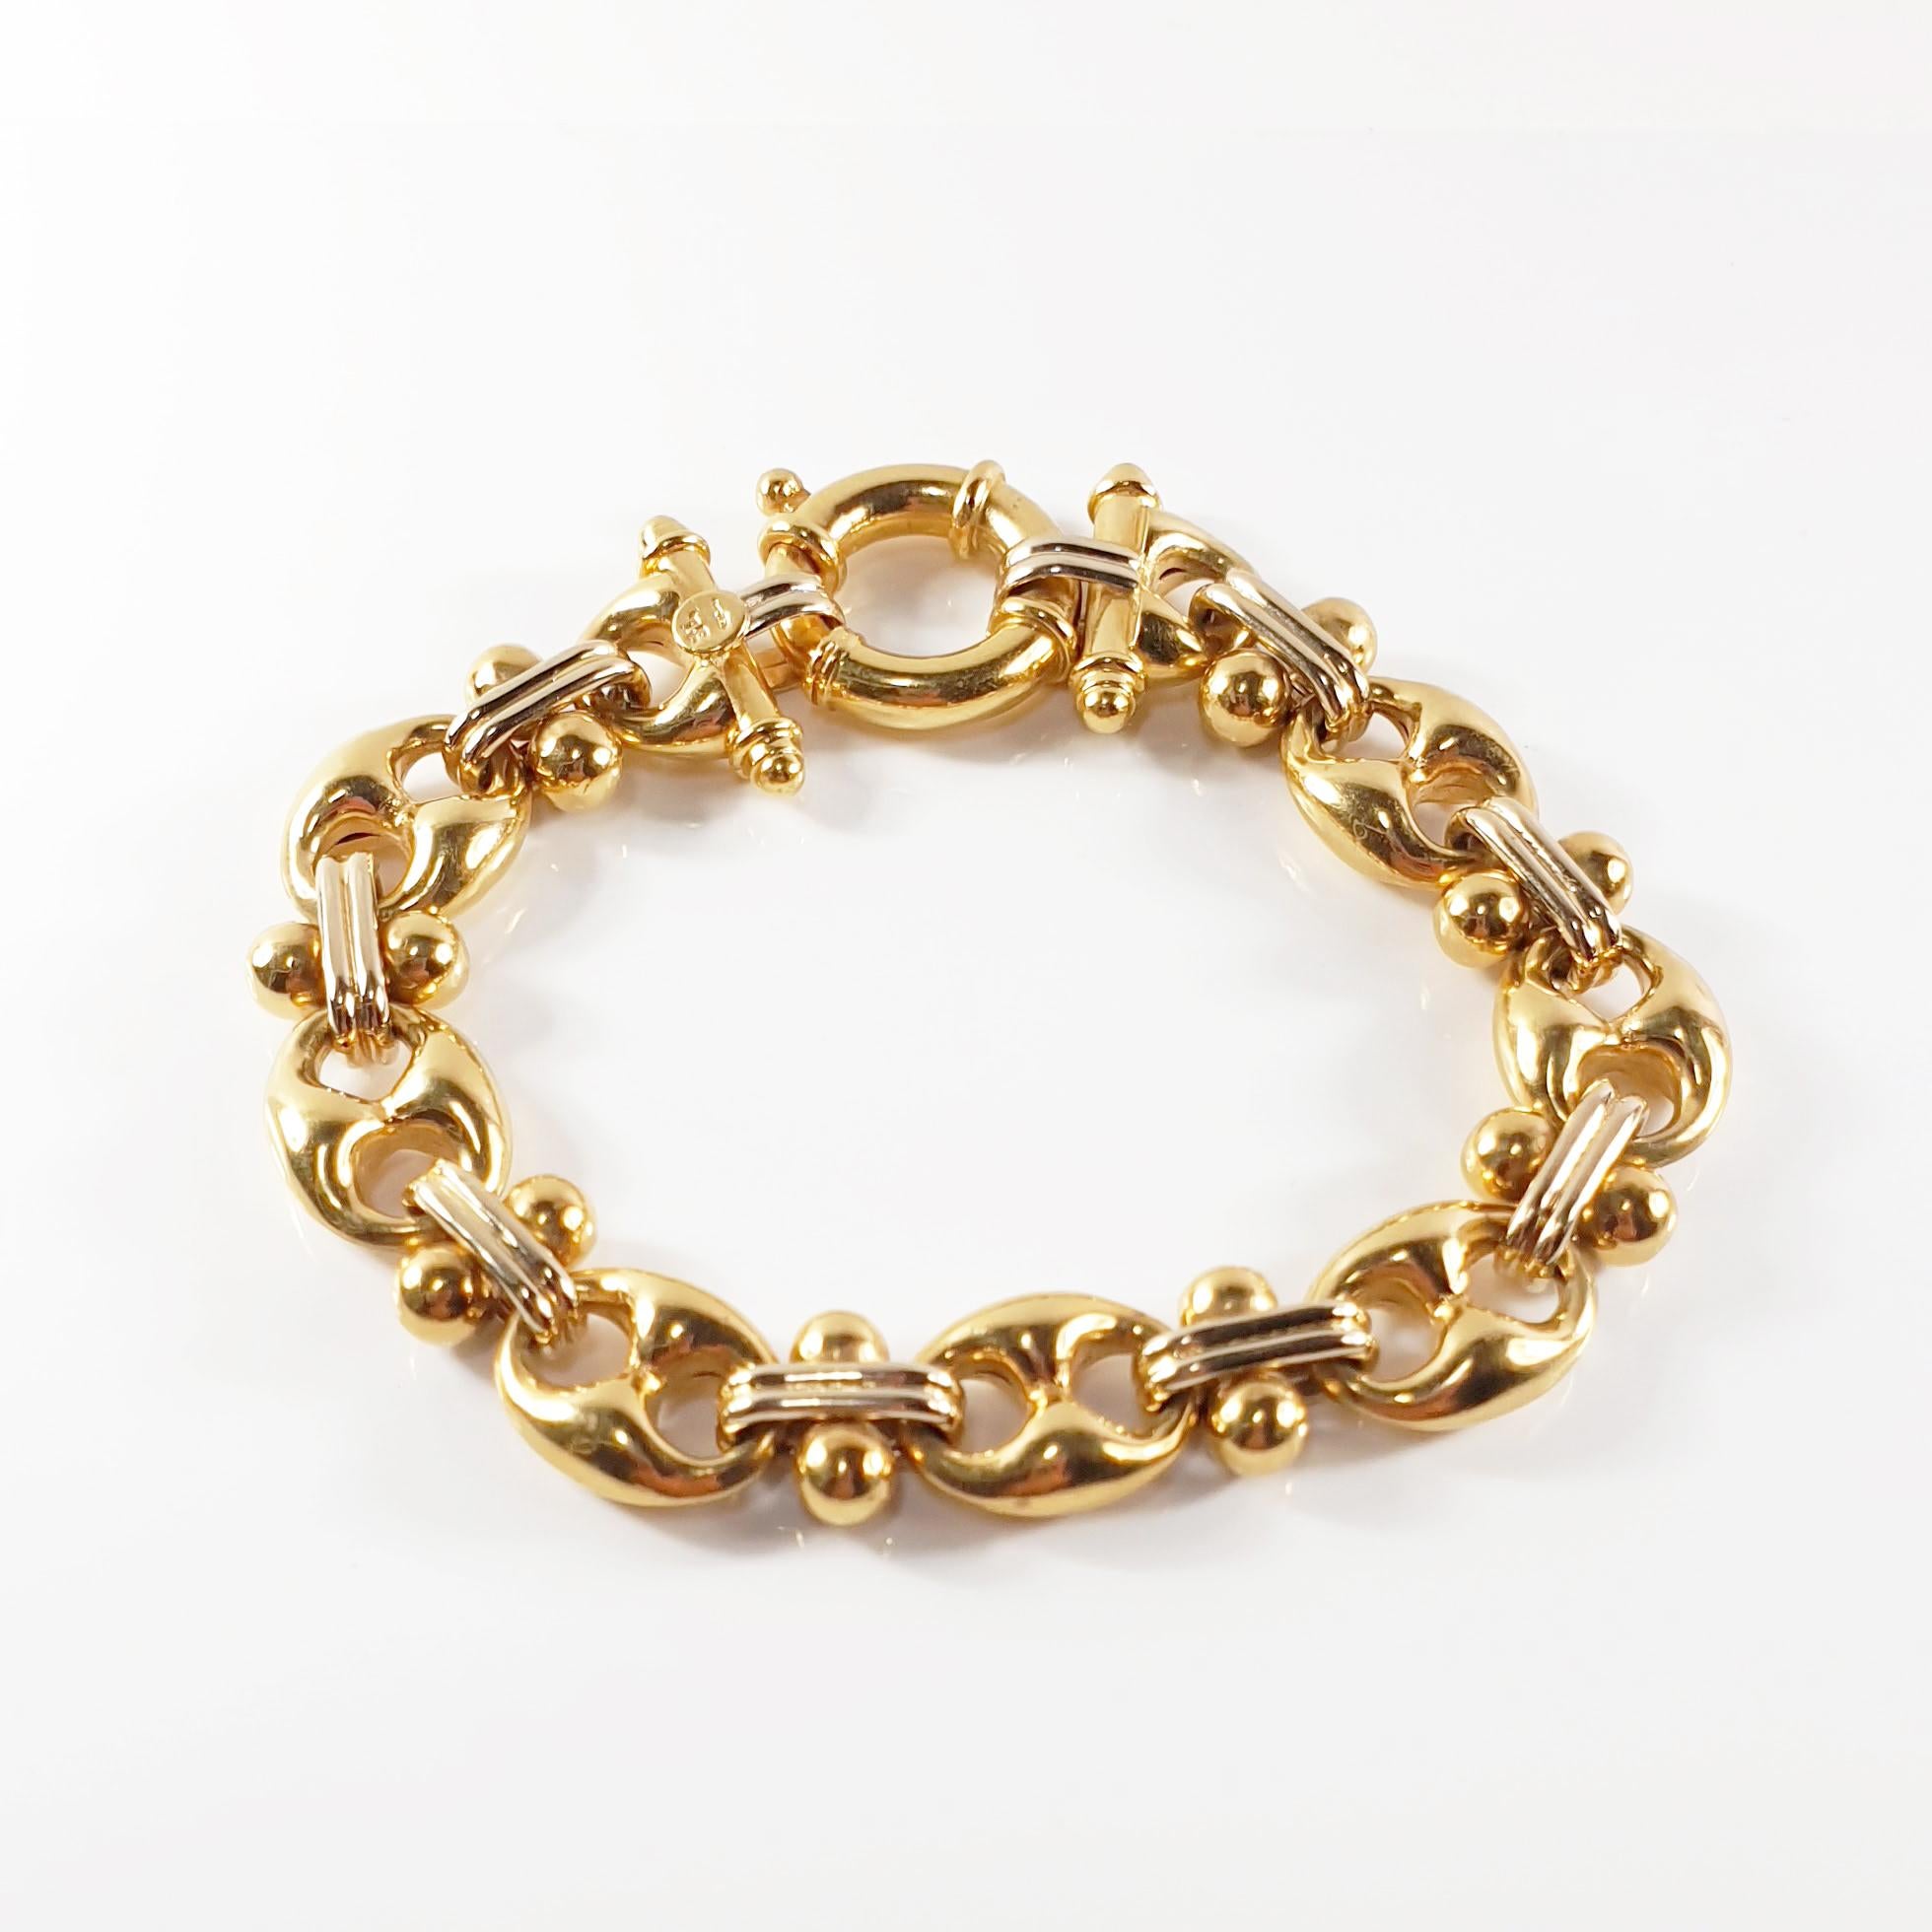 250g gold chain